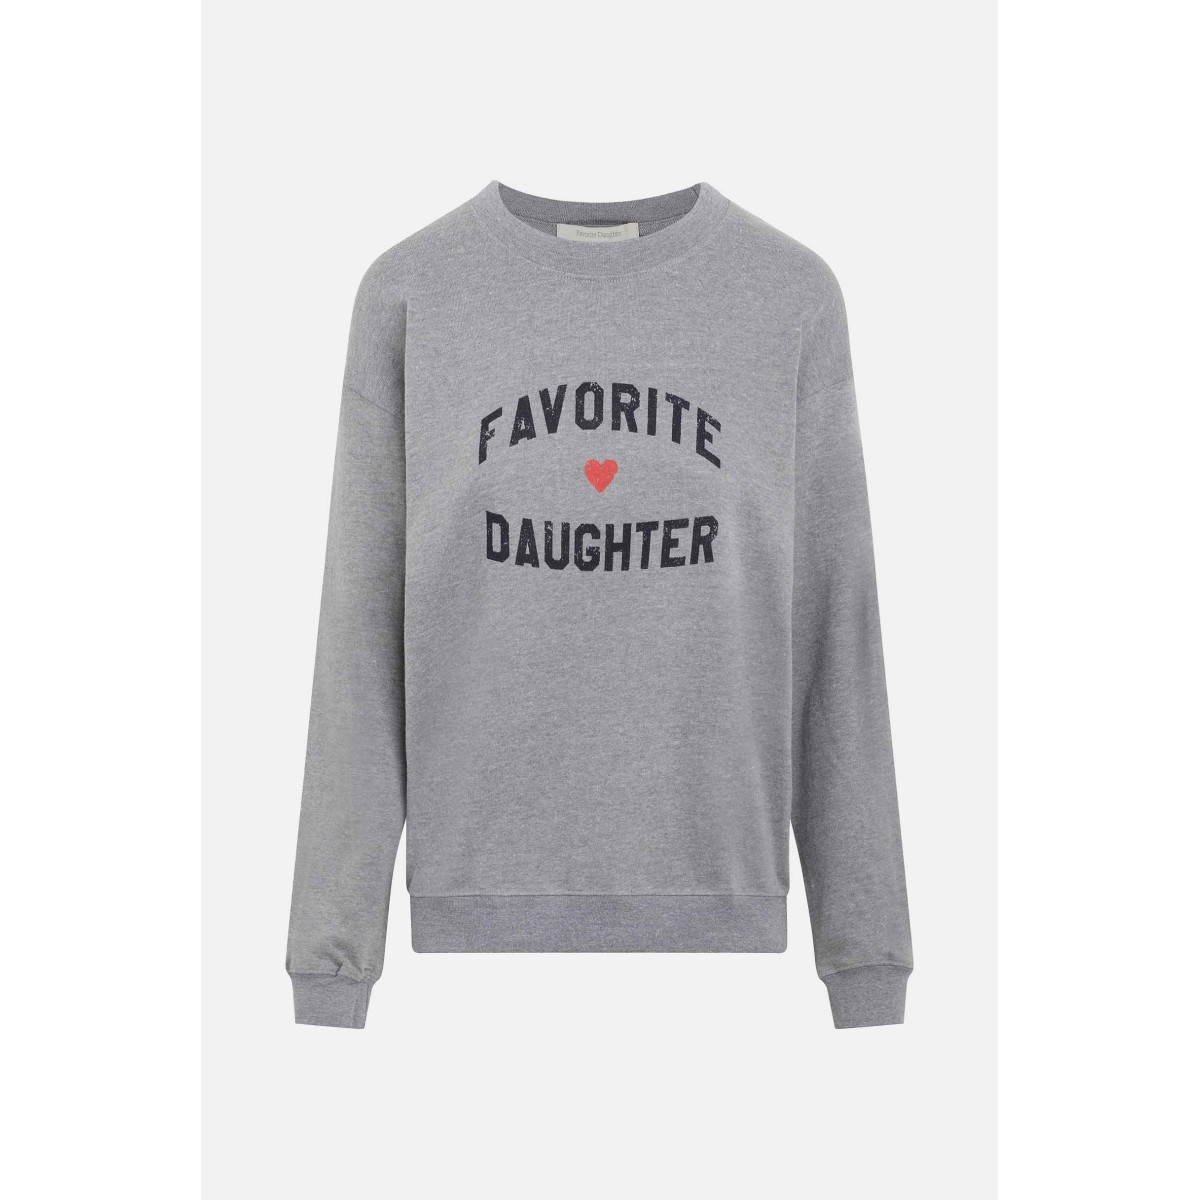 Sweatshirt "Favorite Daughter" Herz Favorite Daughter